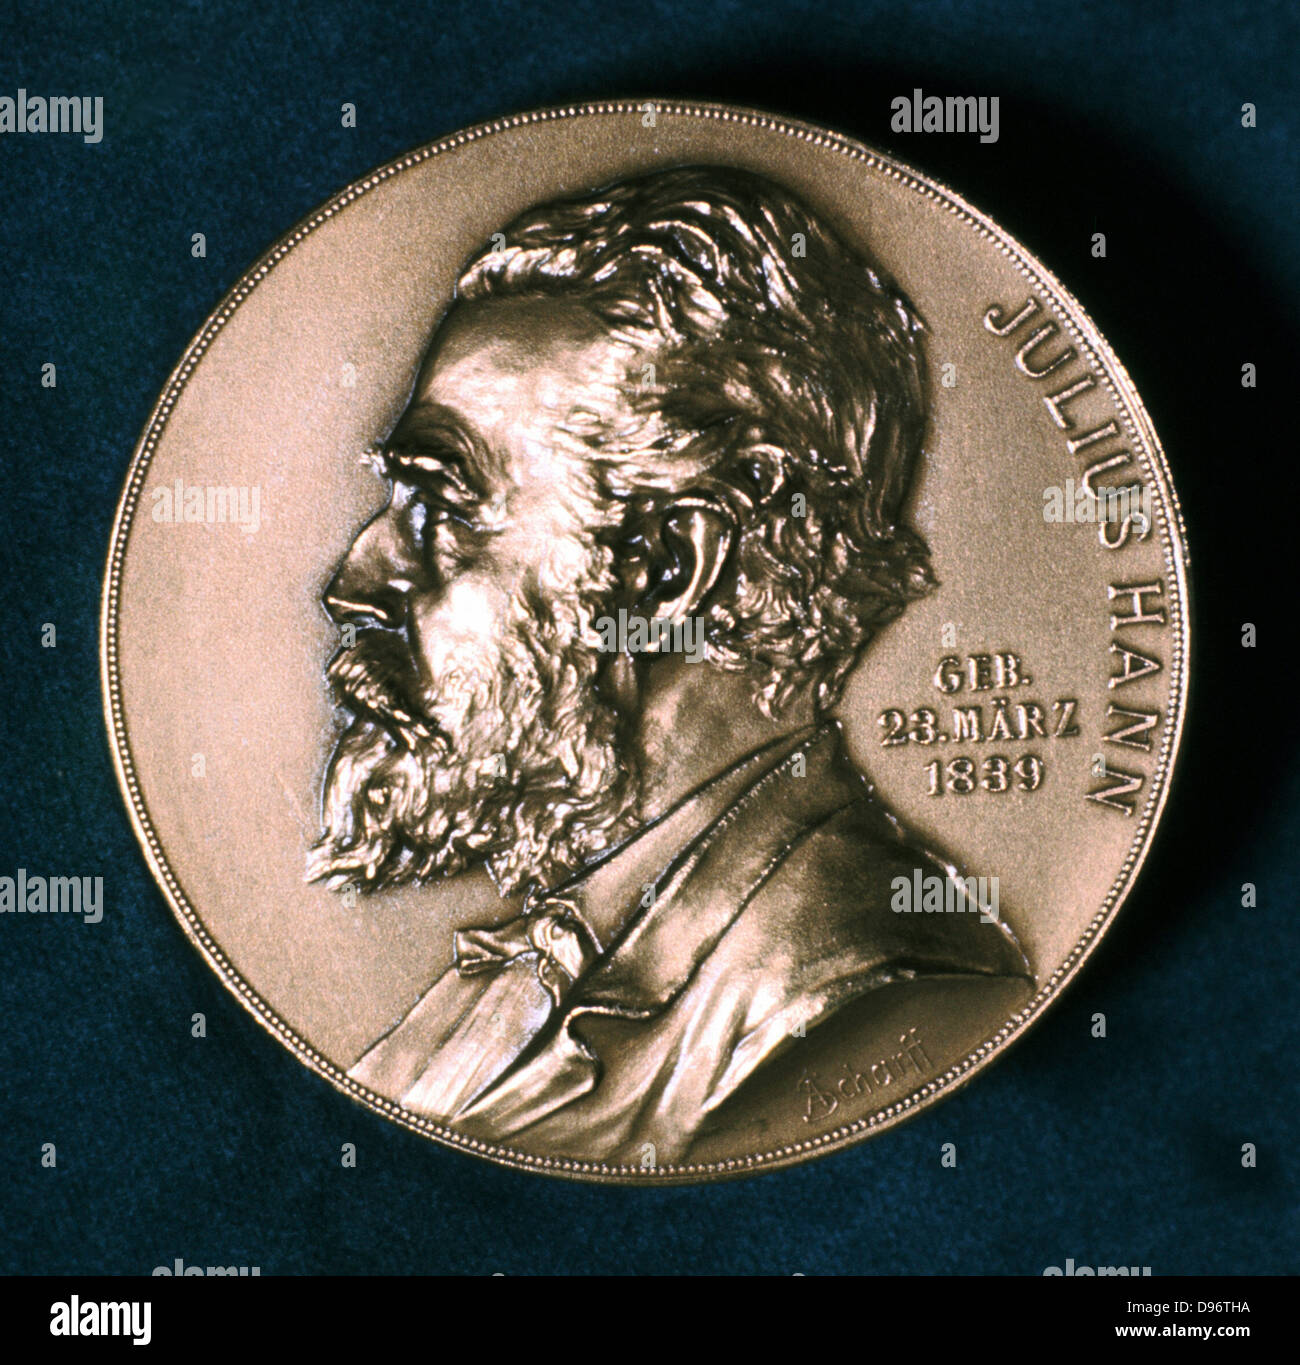 Julius Ferdinand Hann, c1921. Hann (1839-1921), Austrian meteorologist, from a commemorative medal issued by the Austrian Meteorological Society. Stock Photo